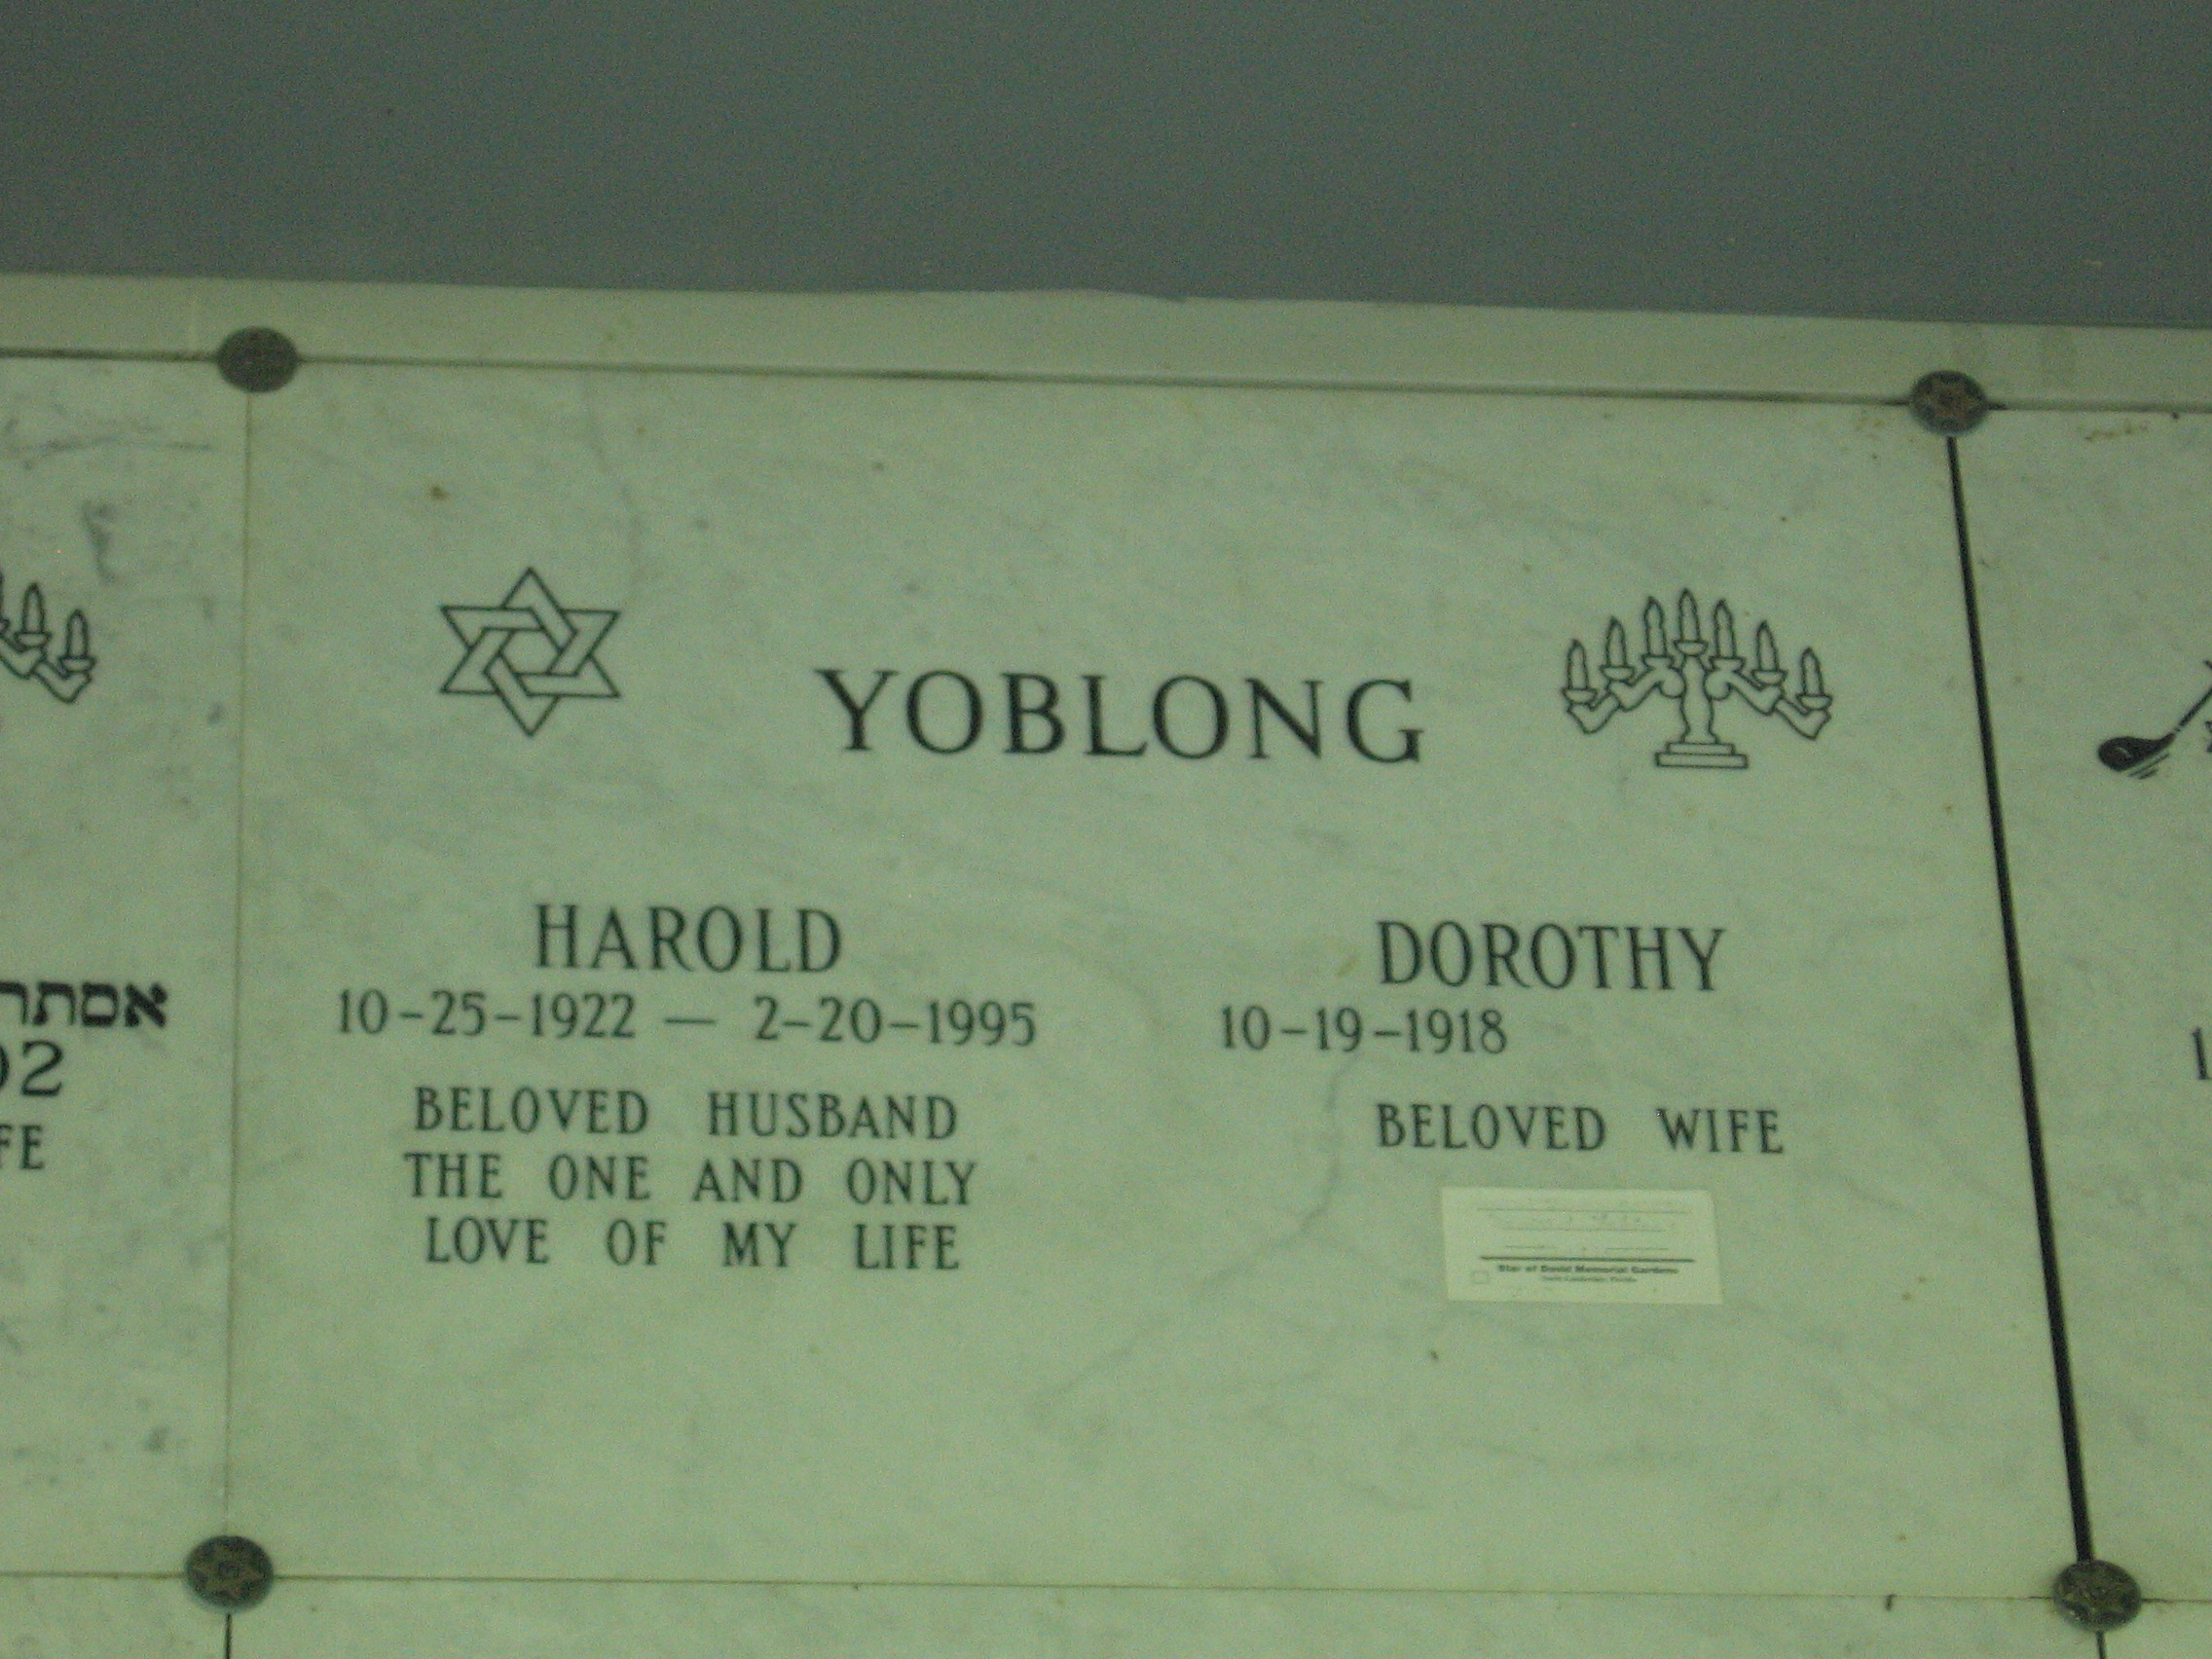 Harold Yoblong